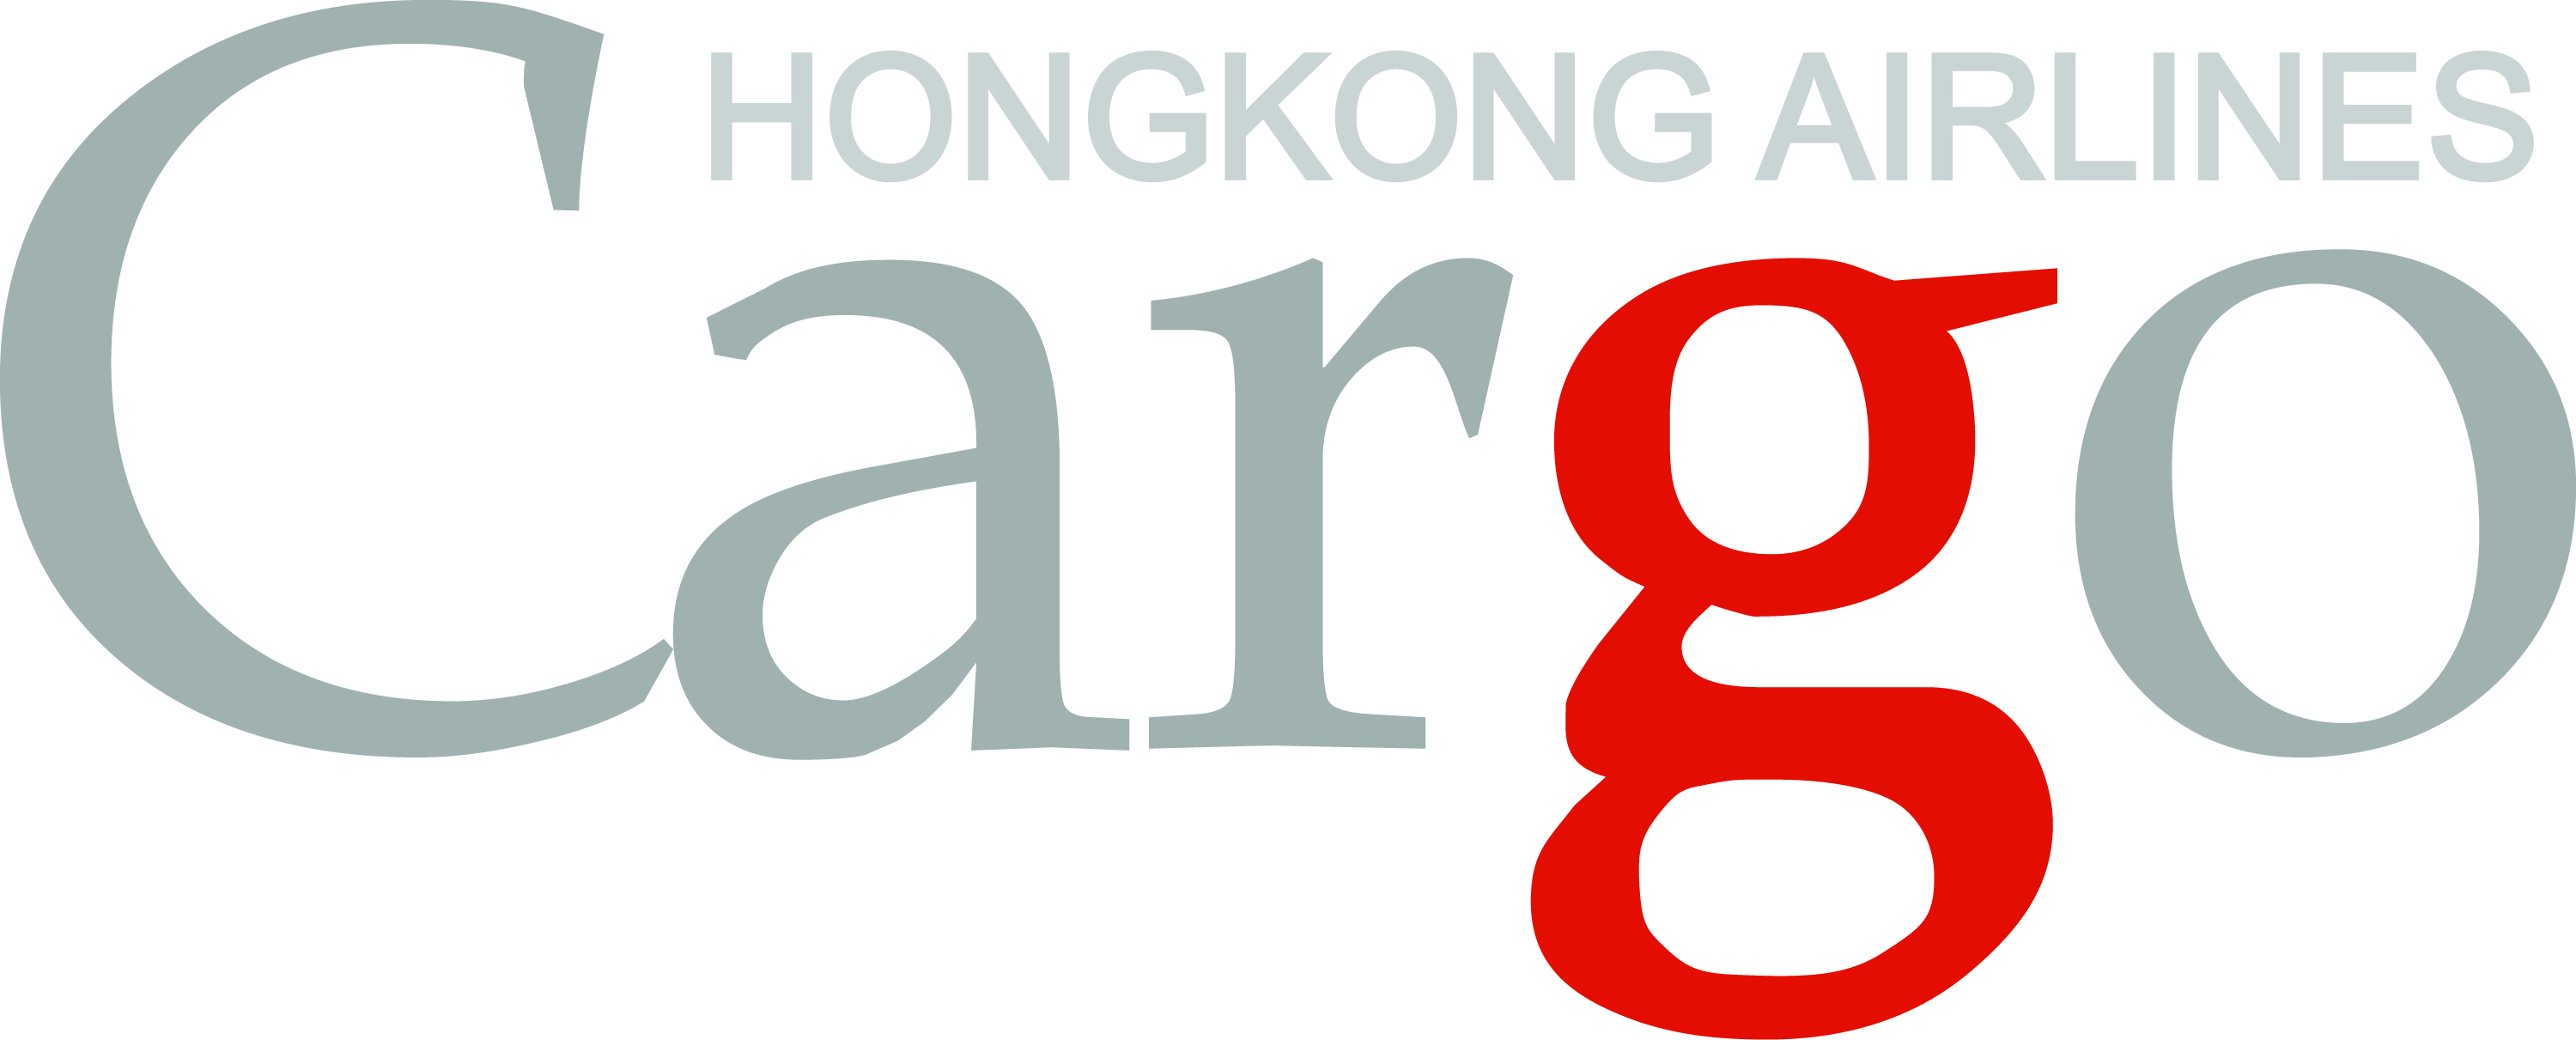 Hong Kong Air Cargo